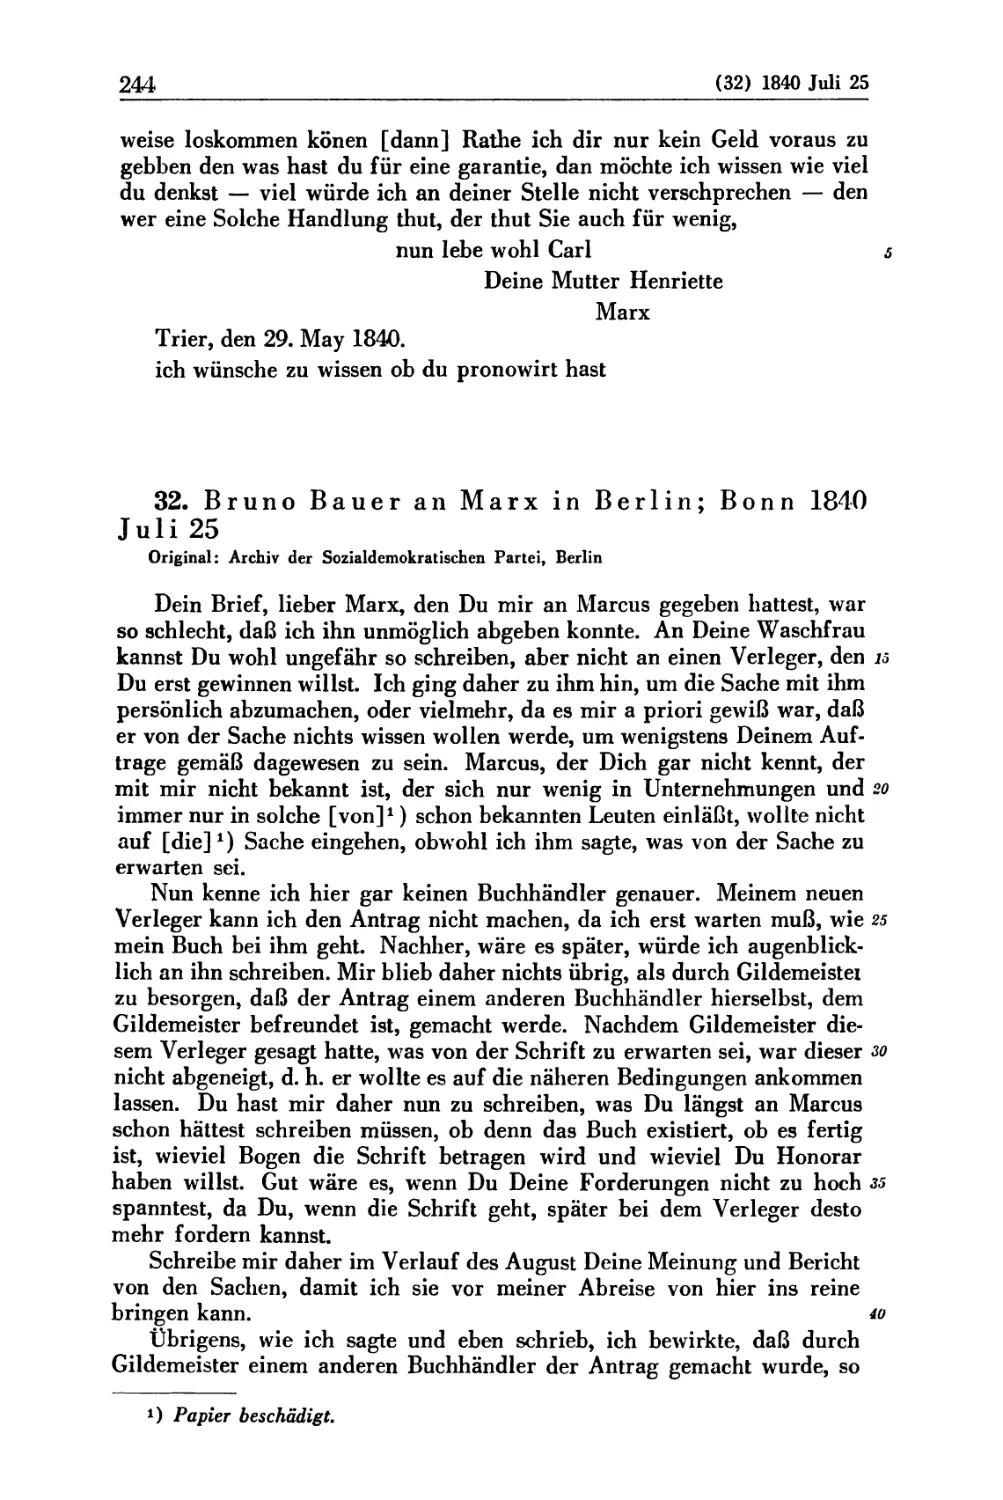 32. Bruno Bauer an Marx in Berlin; Bonn 1840 Juli 25